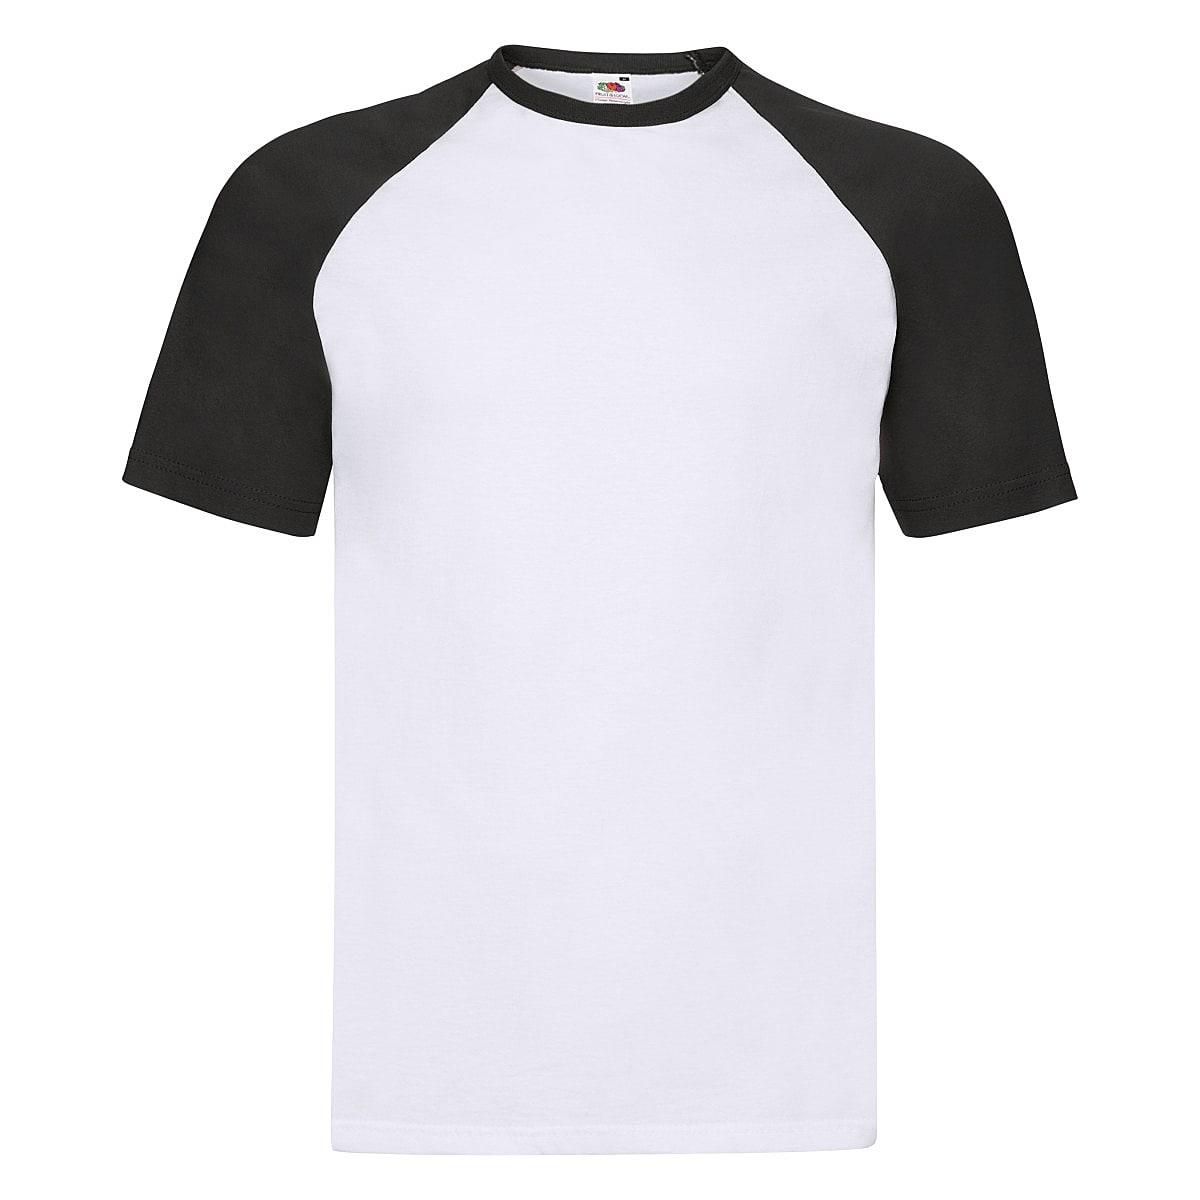 Fruit Of The Loom Short-Sleeve Baseball T-Shirt in White / Black (Product Code: 61026)